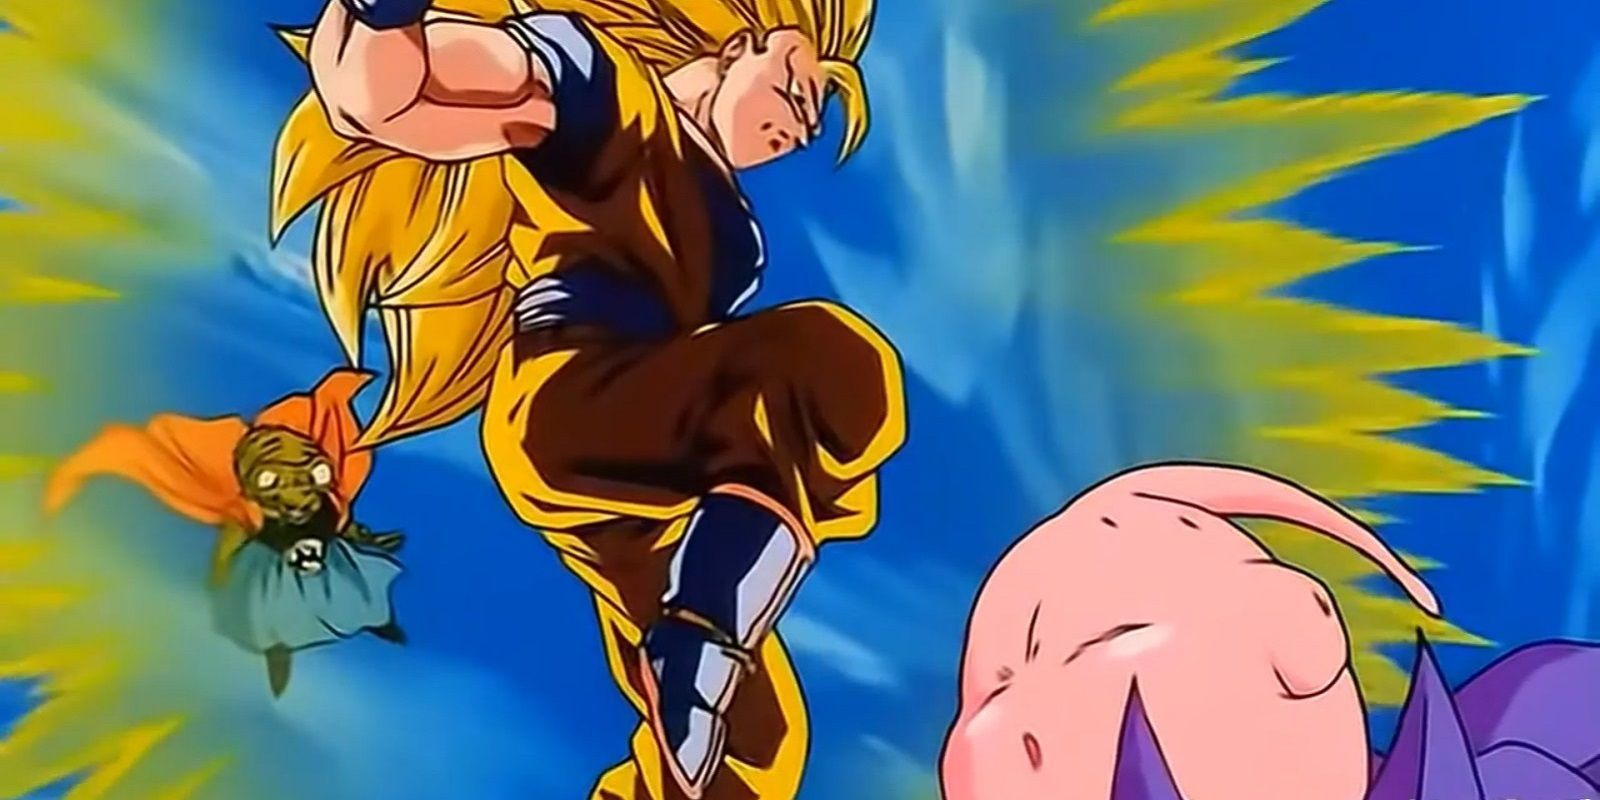 Super Saiyan 3 Goku fighting Fat Buu and Babidi in Dragon Ball Z